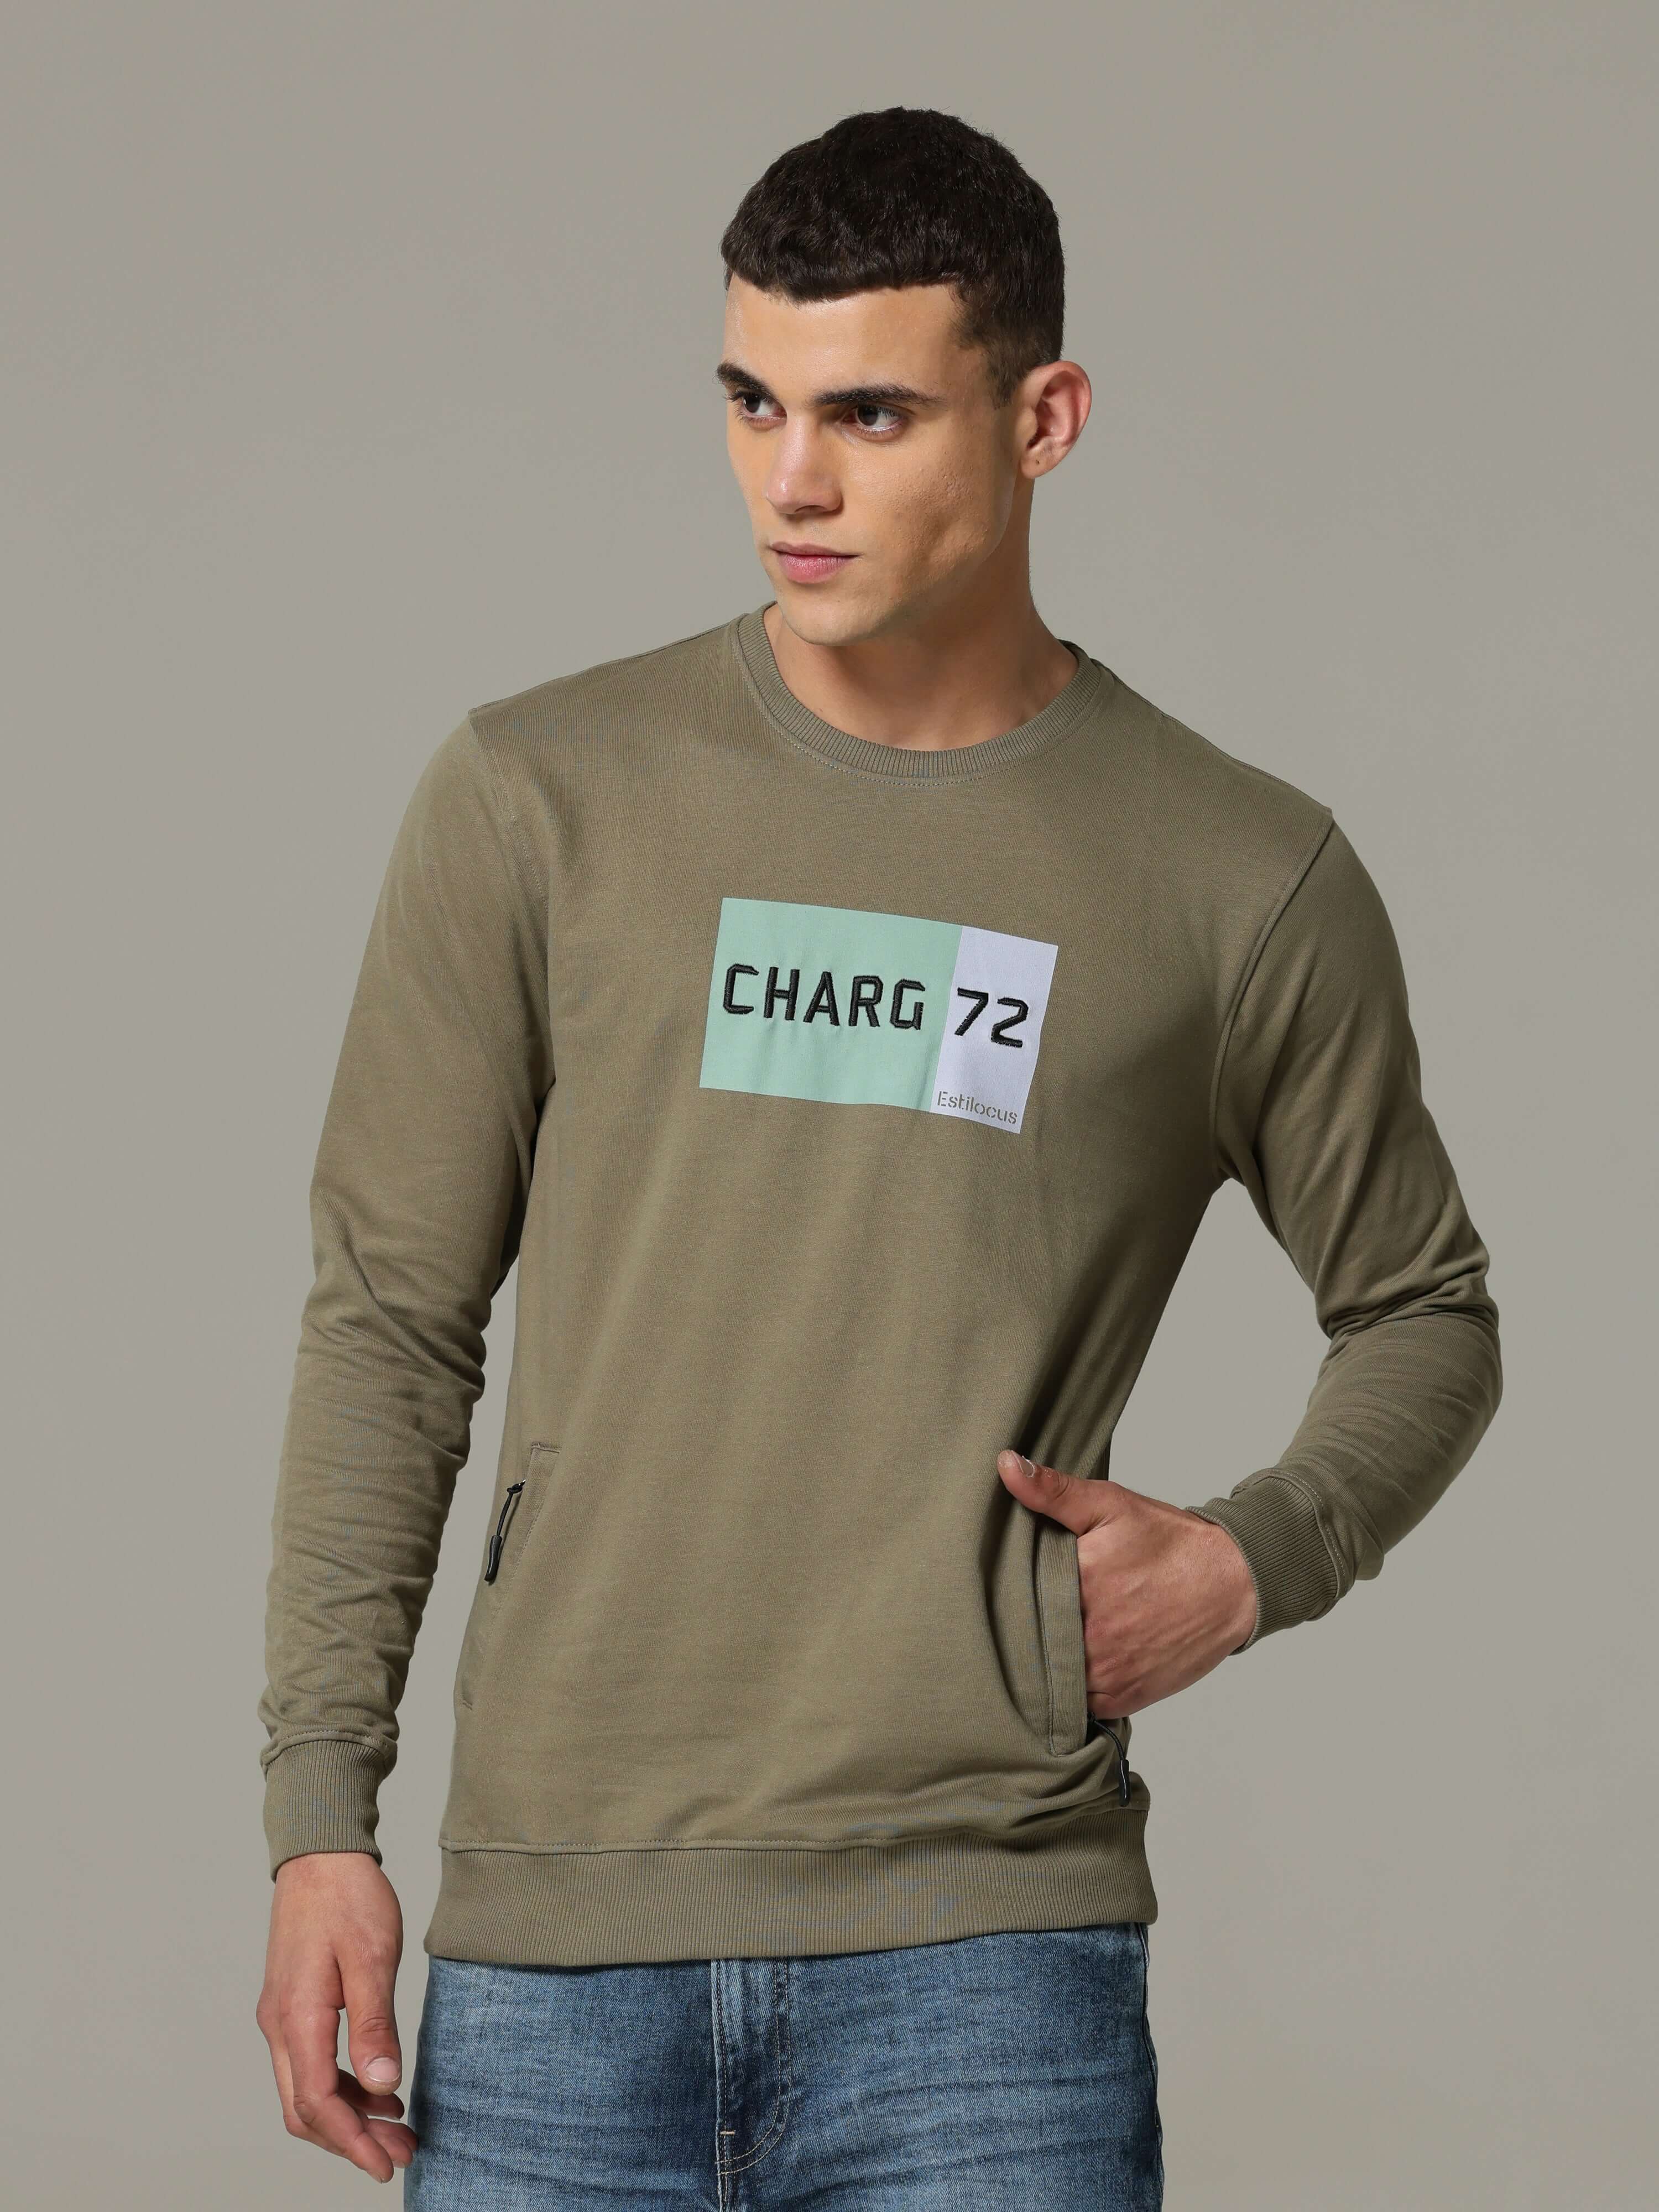 Charg Green Sweat Shirt_ SweatShirt_ estilocus